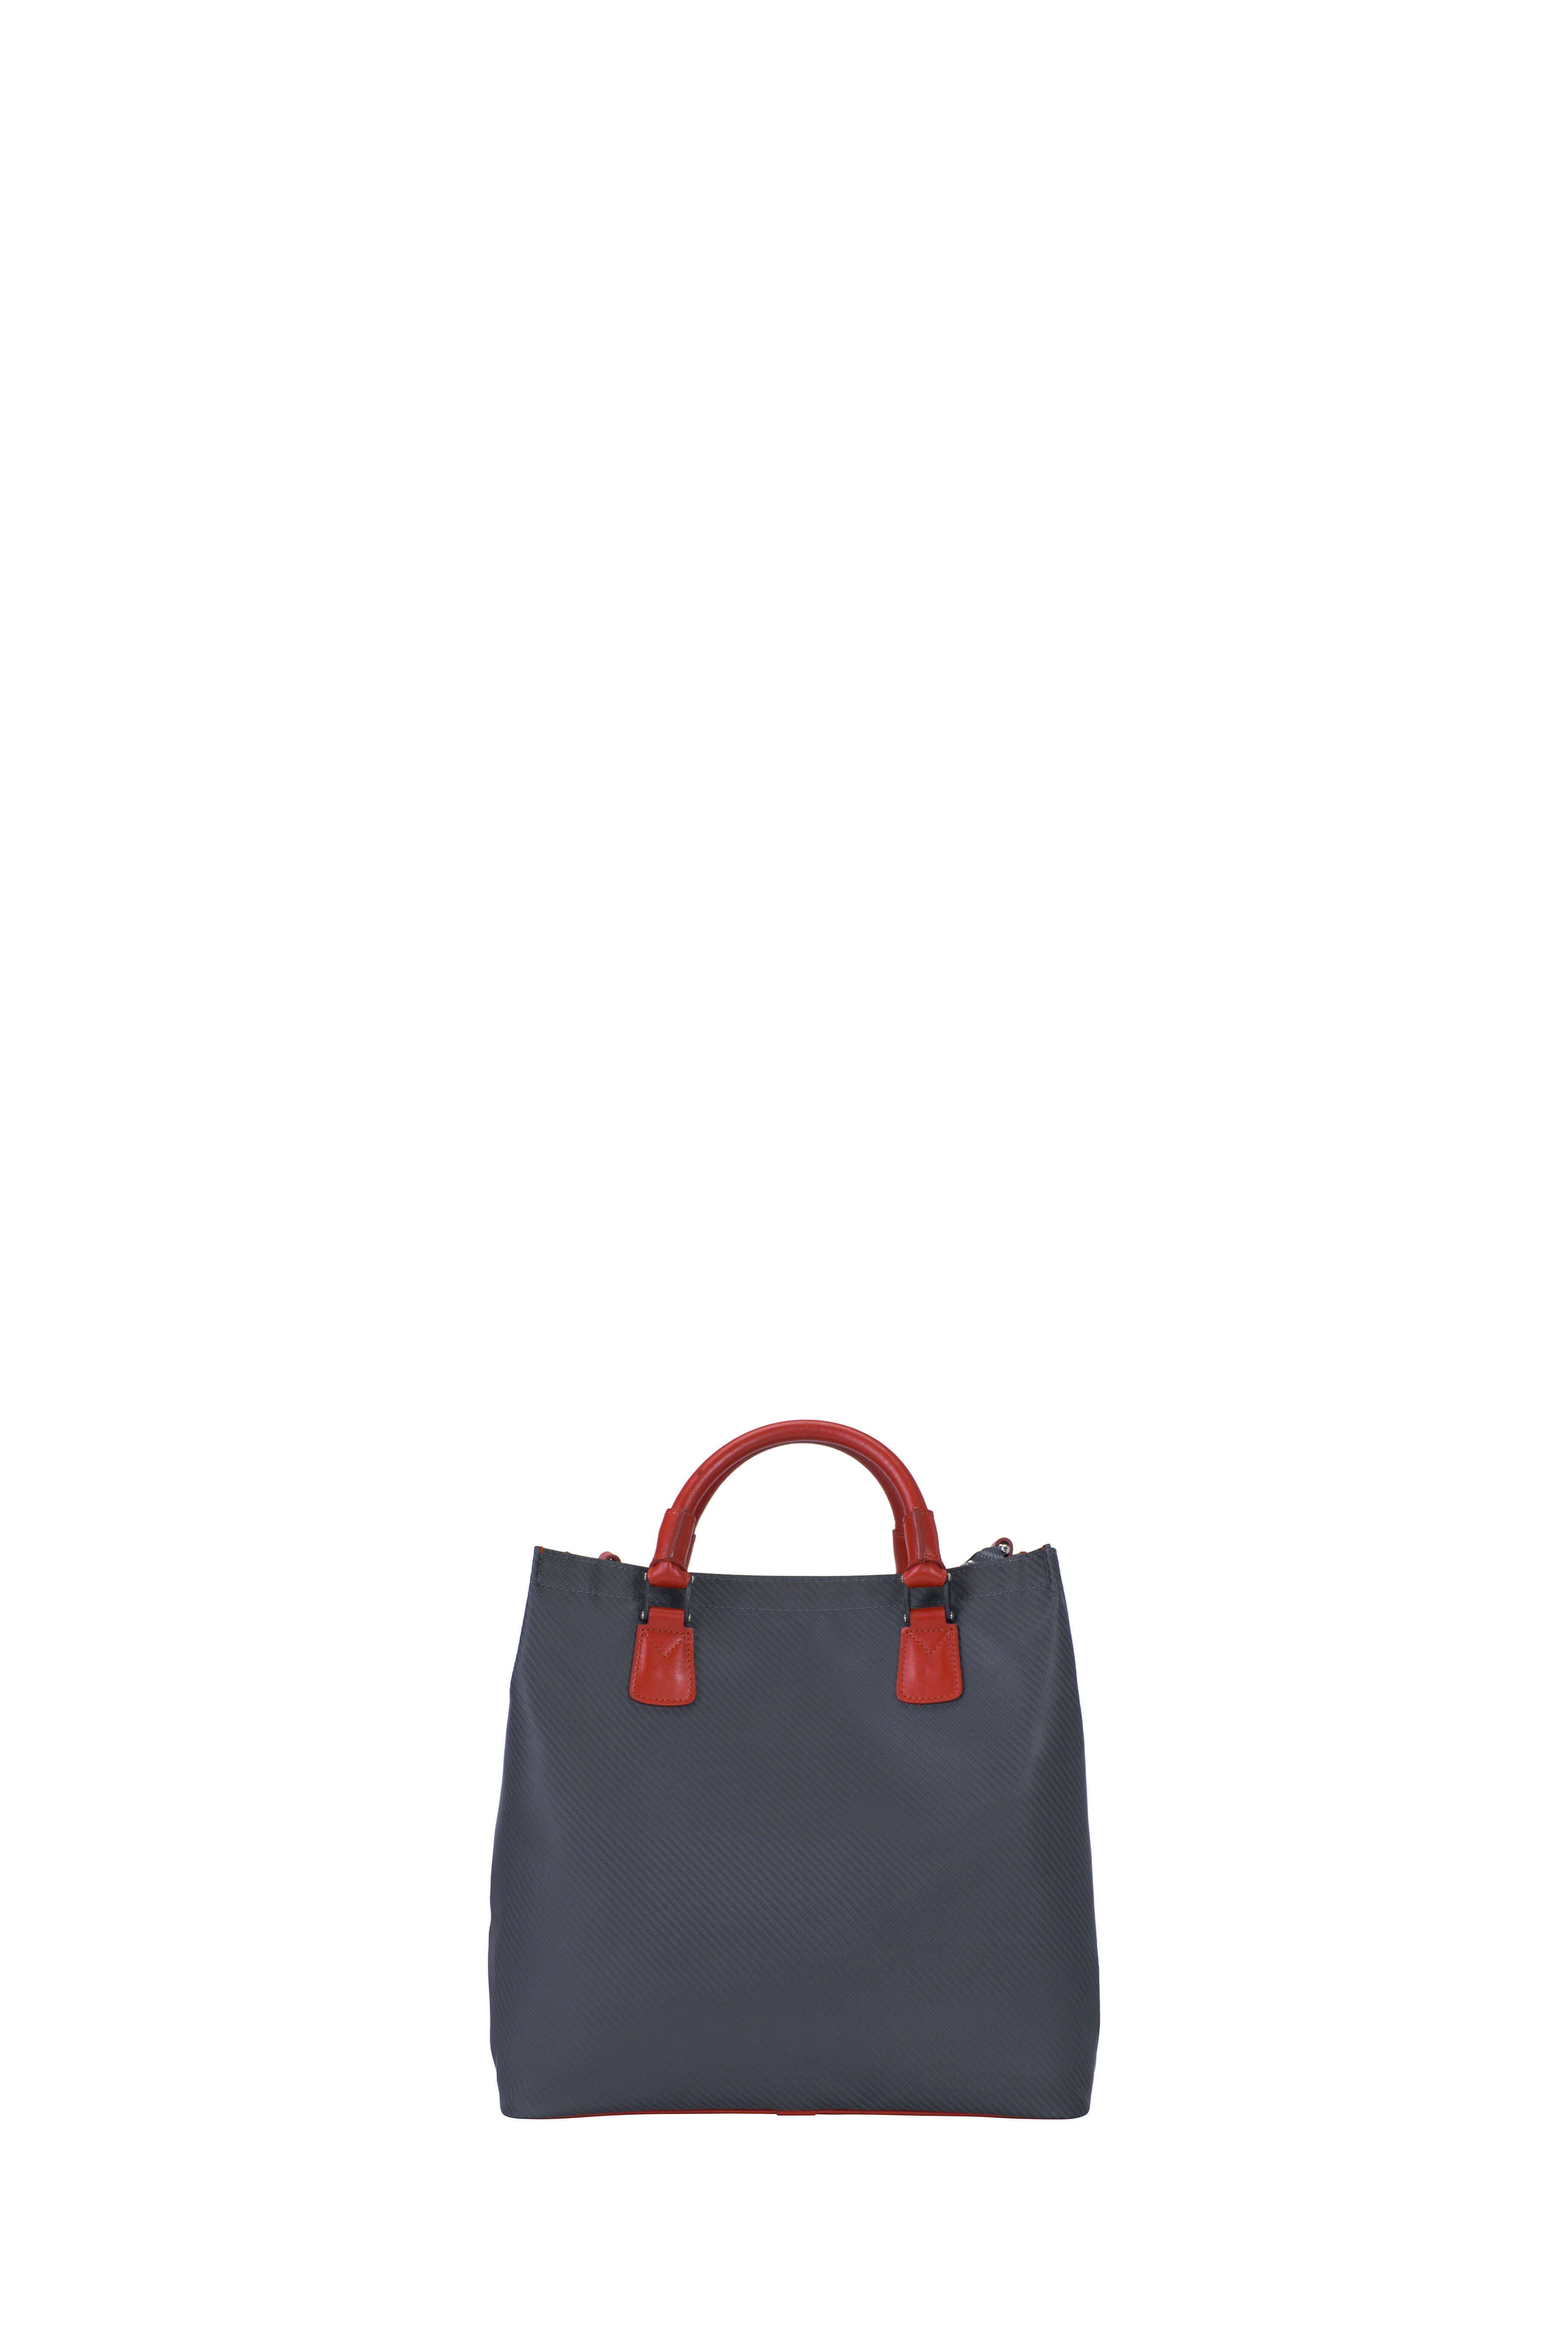 Makne V Soft Carbon Fiber Tote Bag, Red